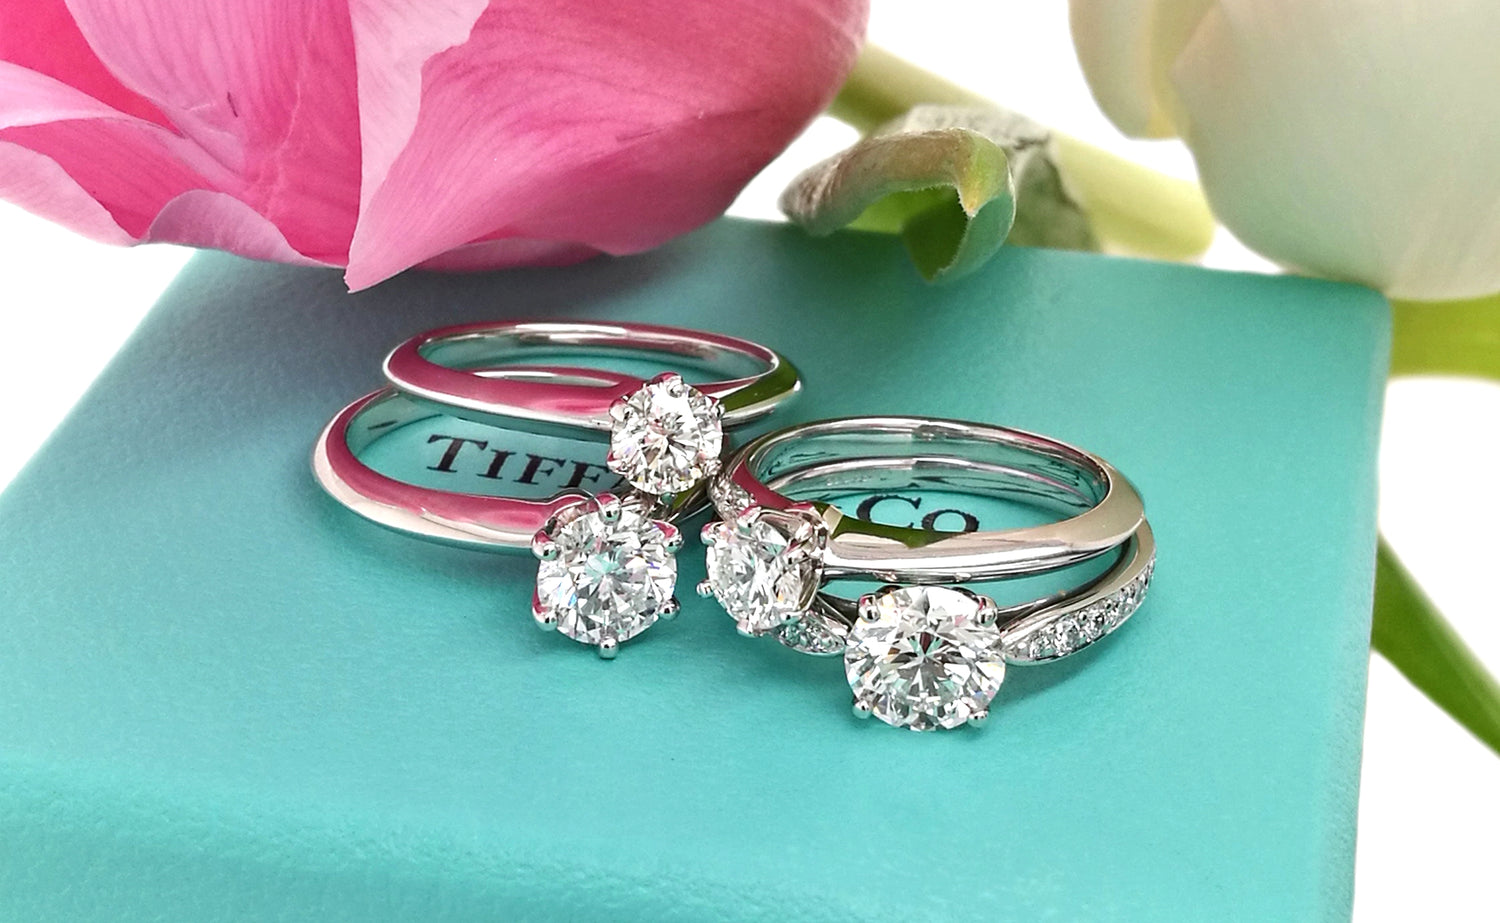 The Tiffany Diamond Has A Joyful New Setting | The Adventurine